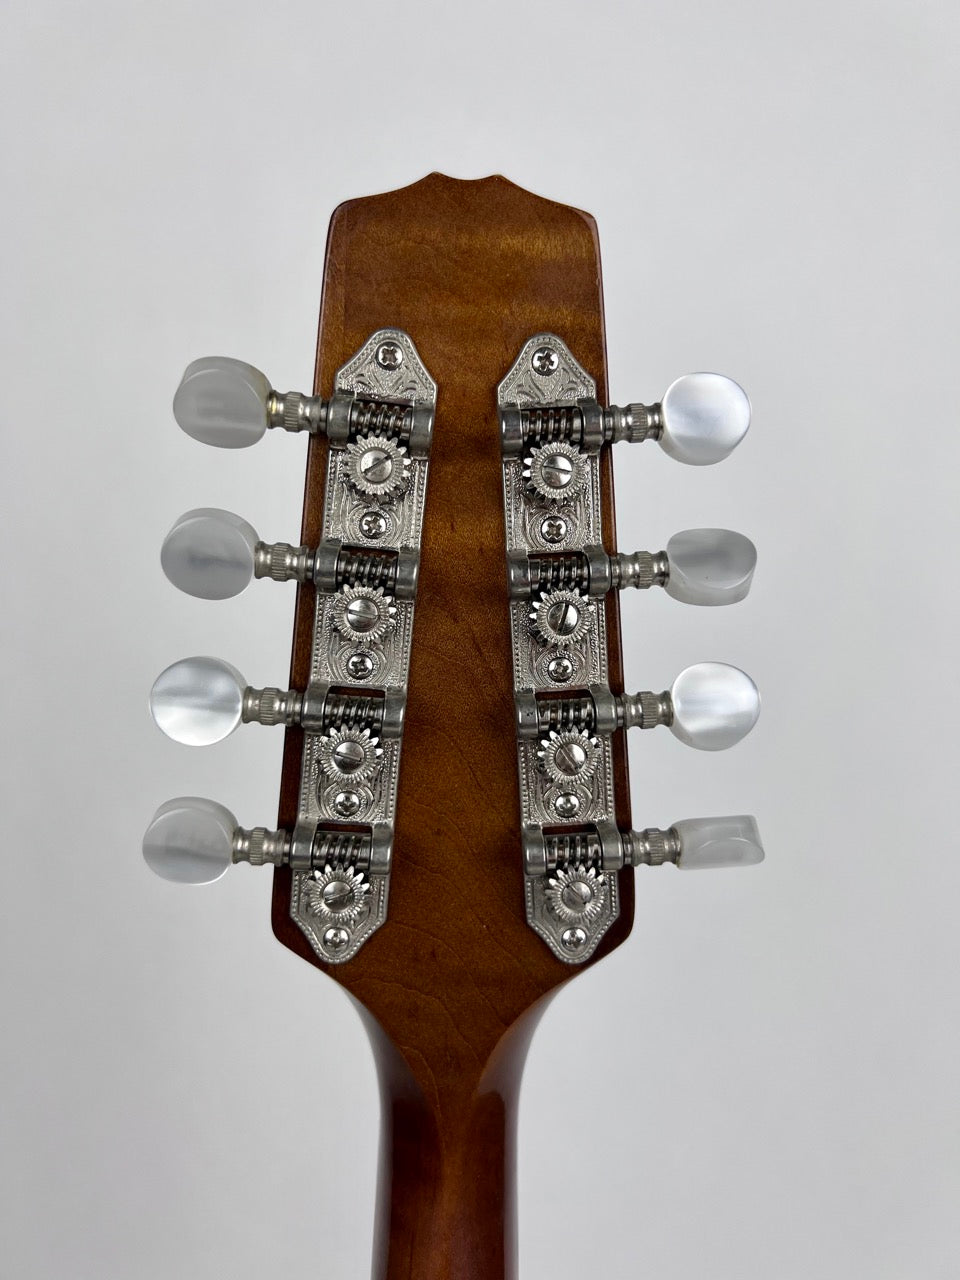 2004 Gibson A9 Snakehead Mandolin